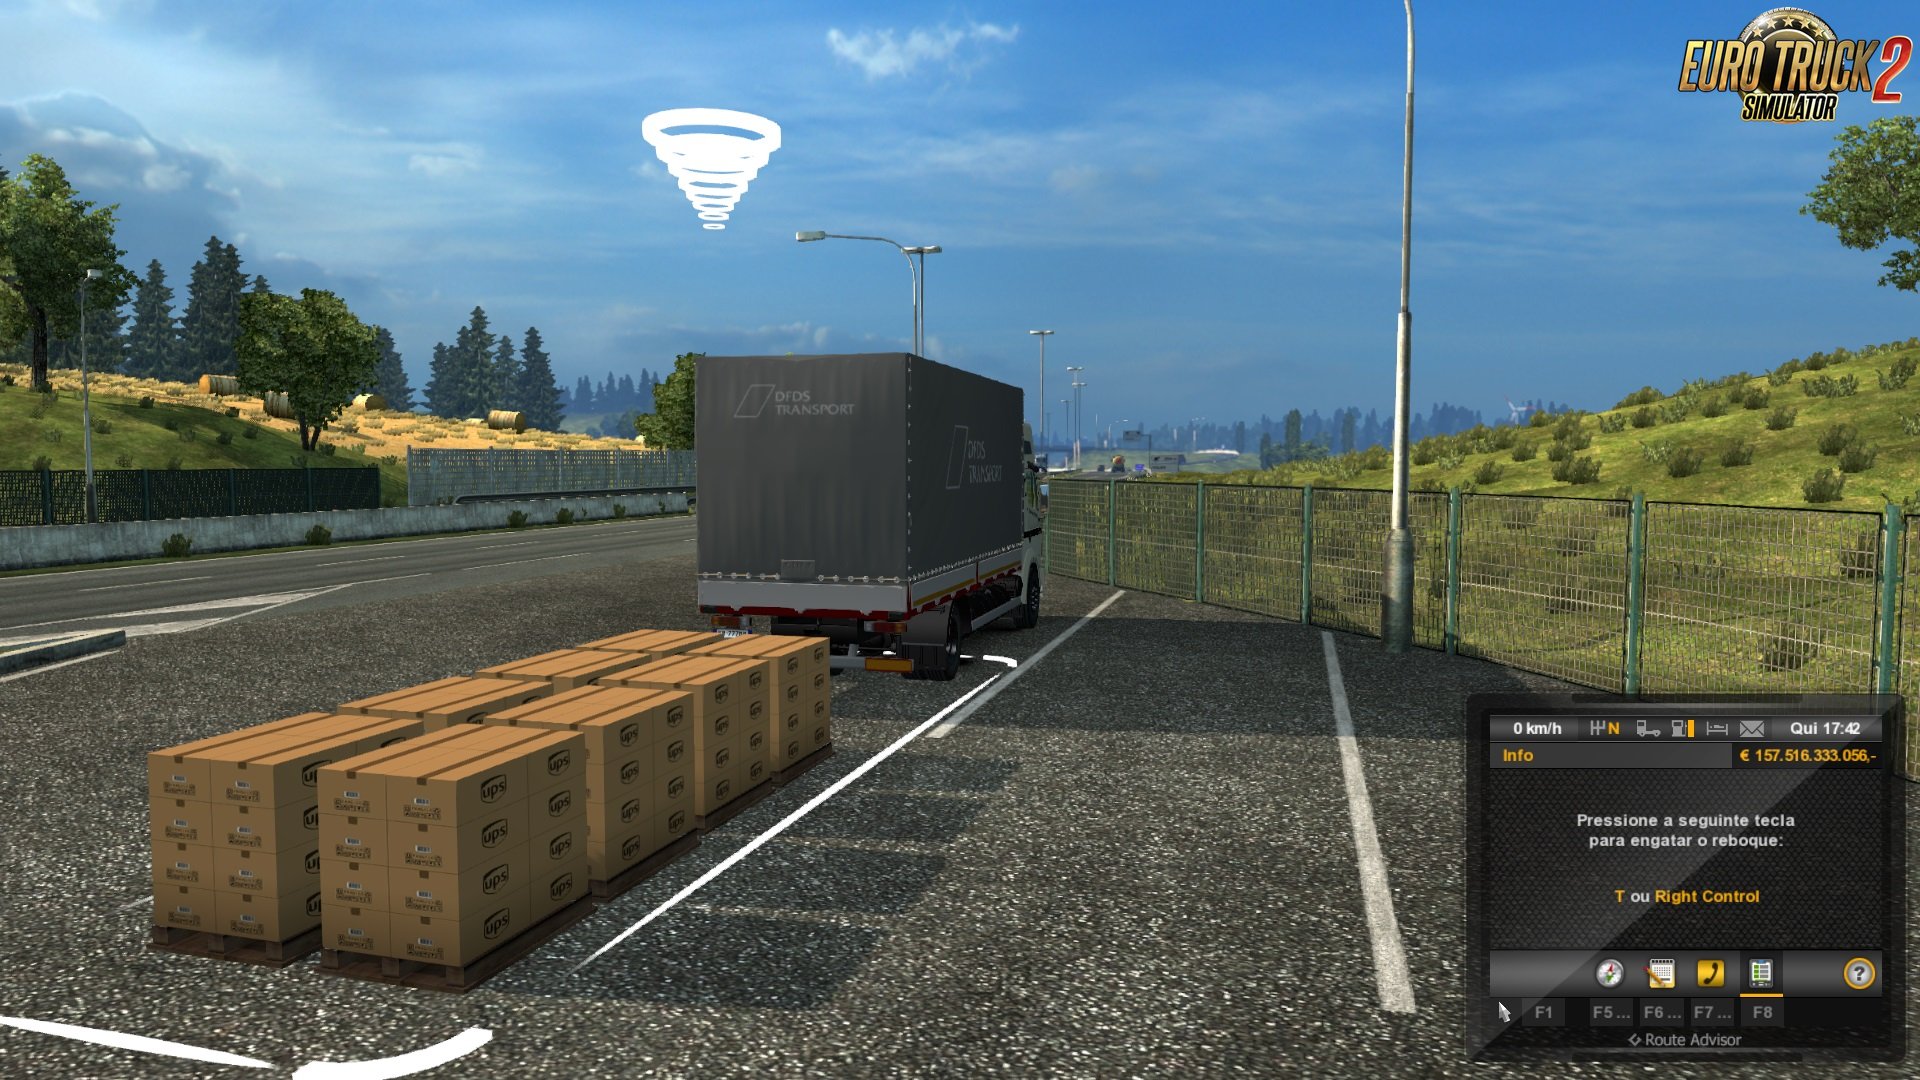 Mini Cargo Pack for BDFs v1.1 in Ets2